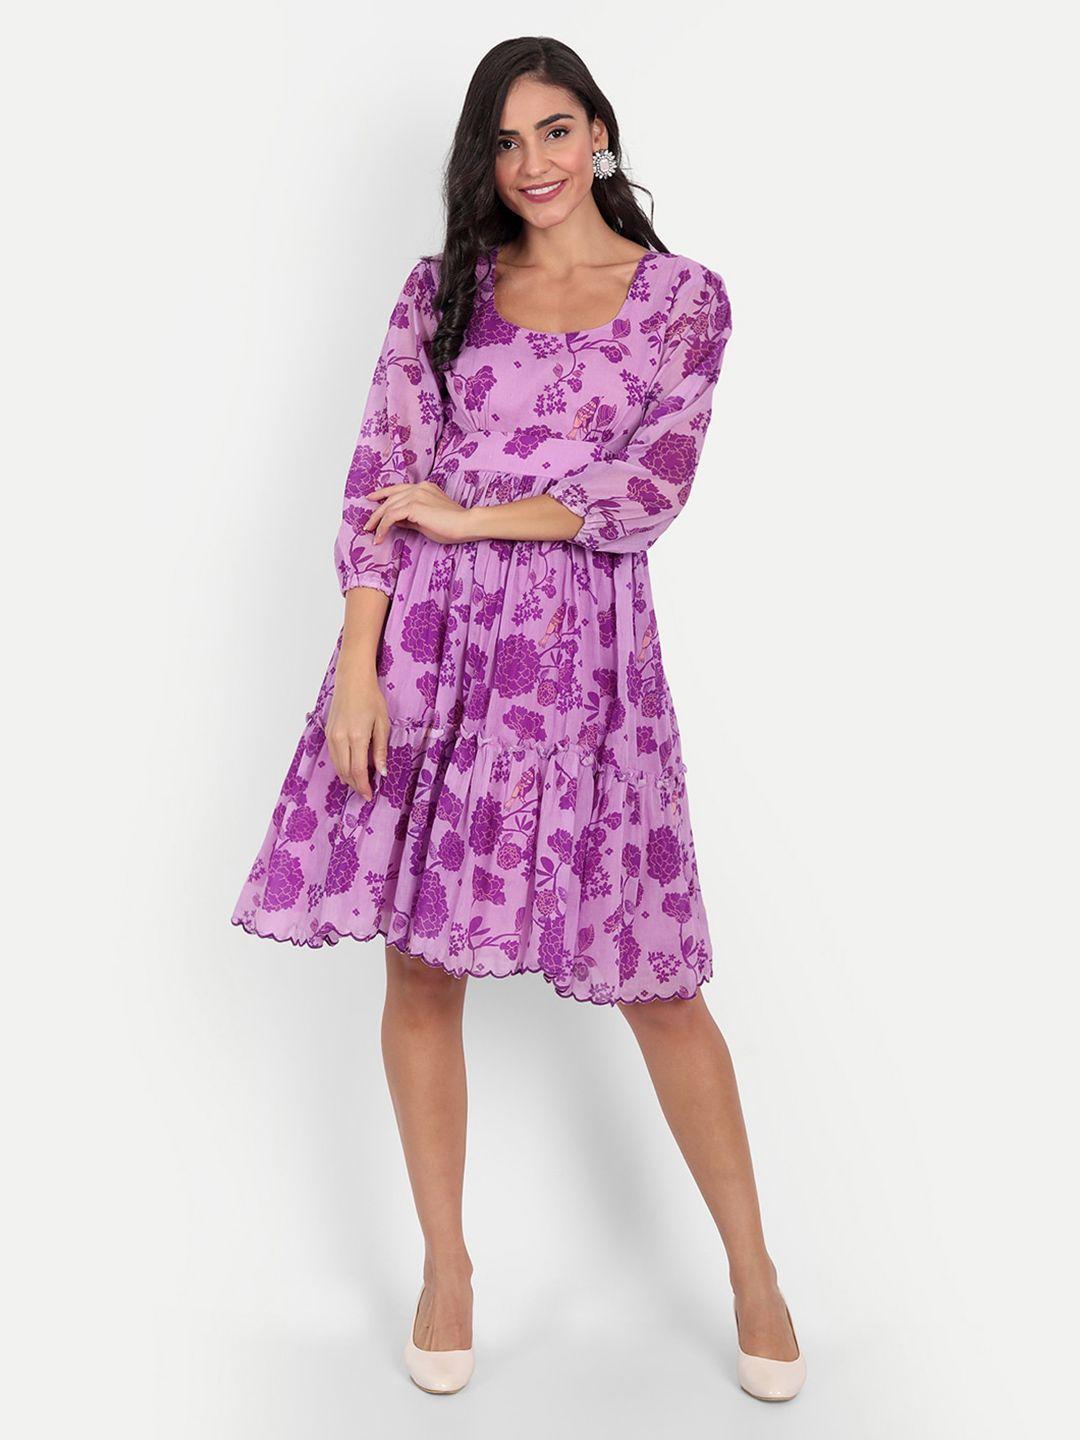 kapasriti purple floral printed cotton fit and flare dress